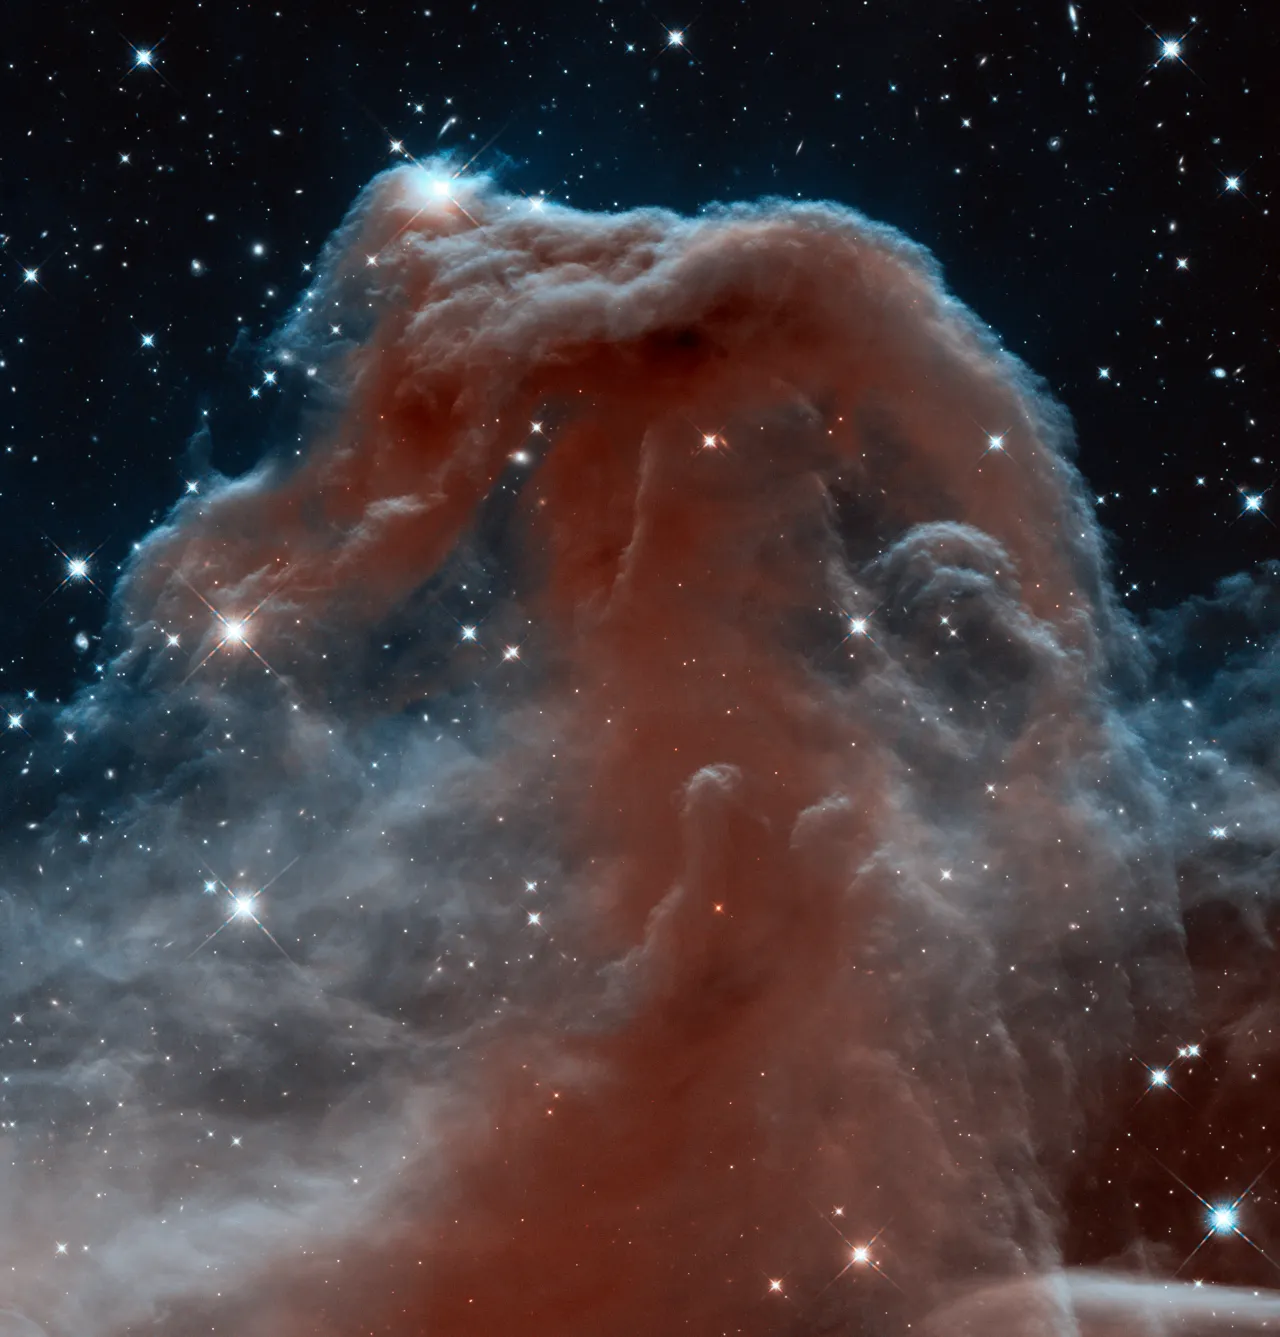 Horsehead nebula by hubble